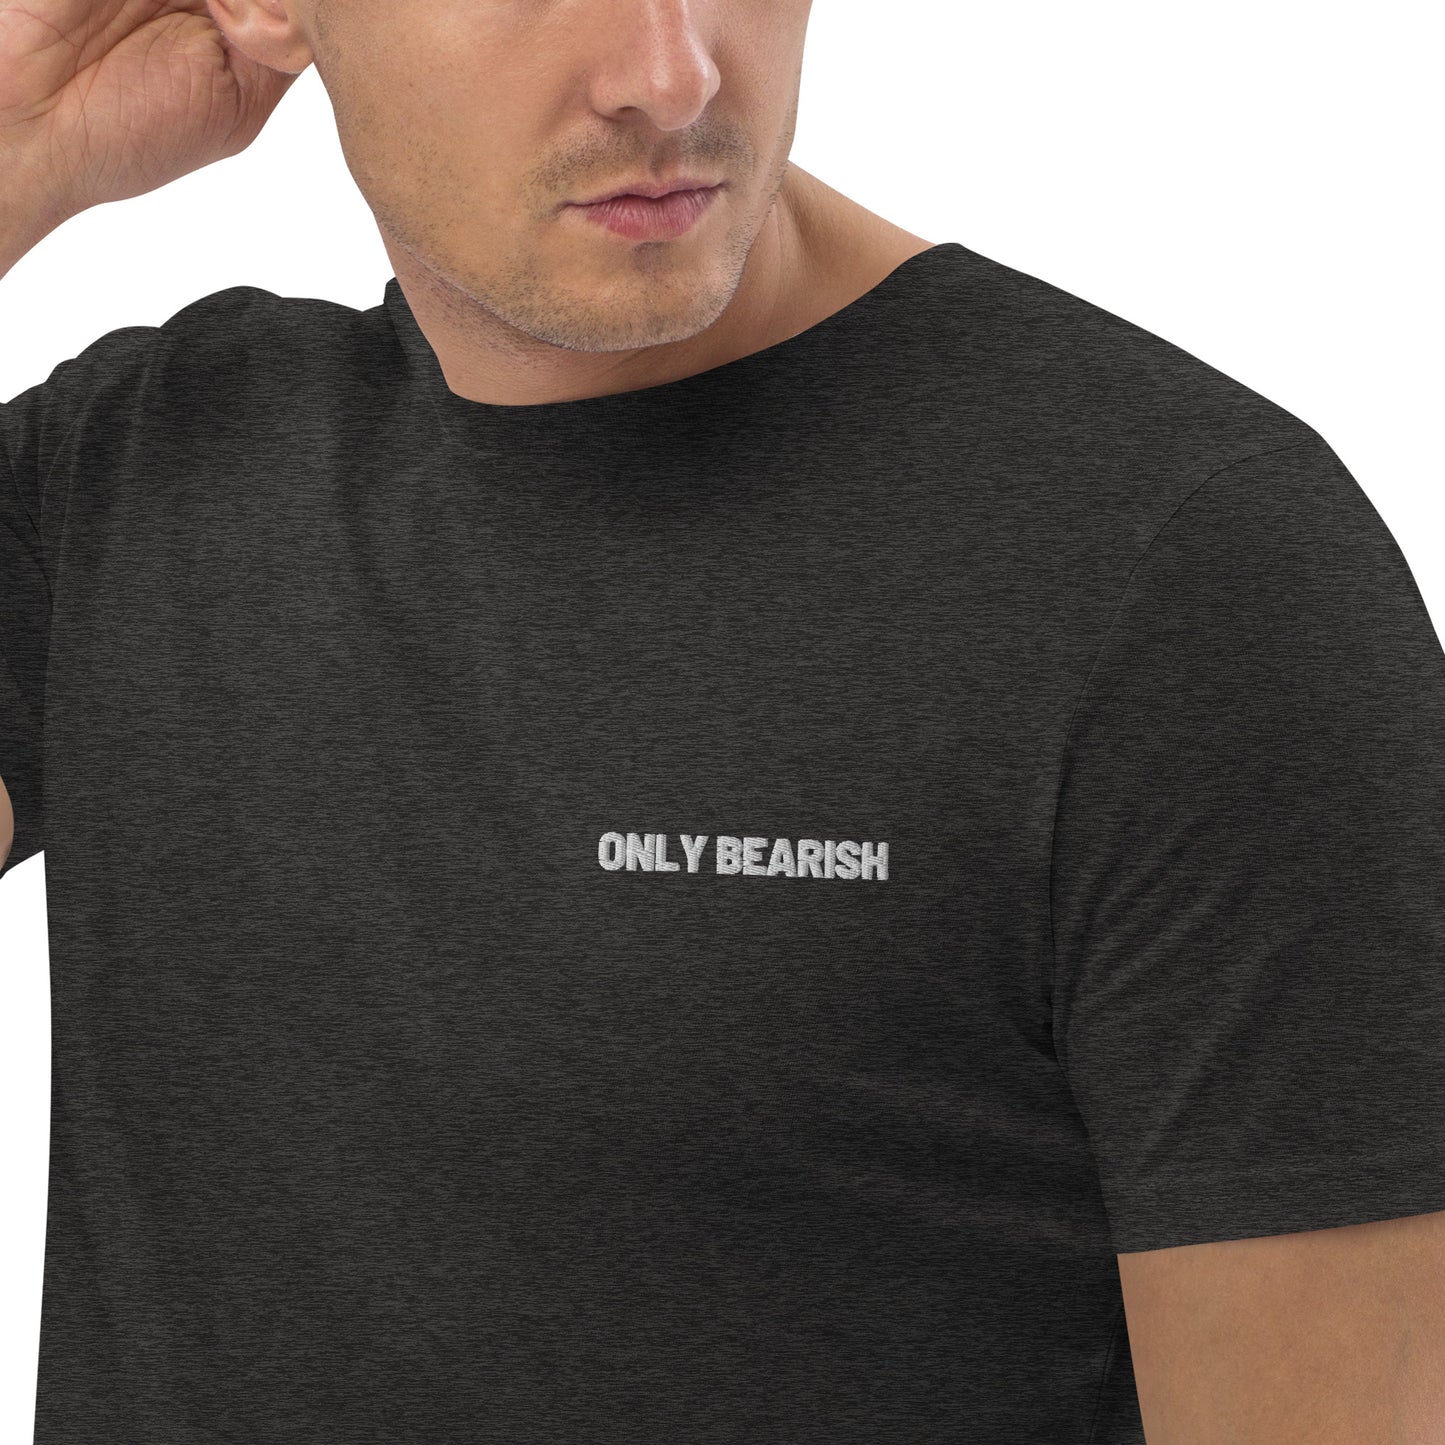 Only Bearish t-shirt